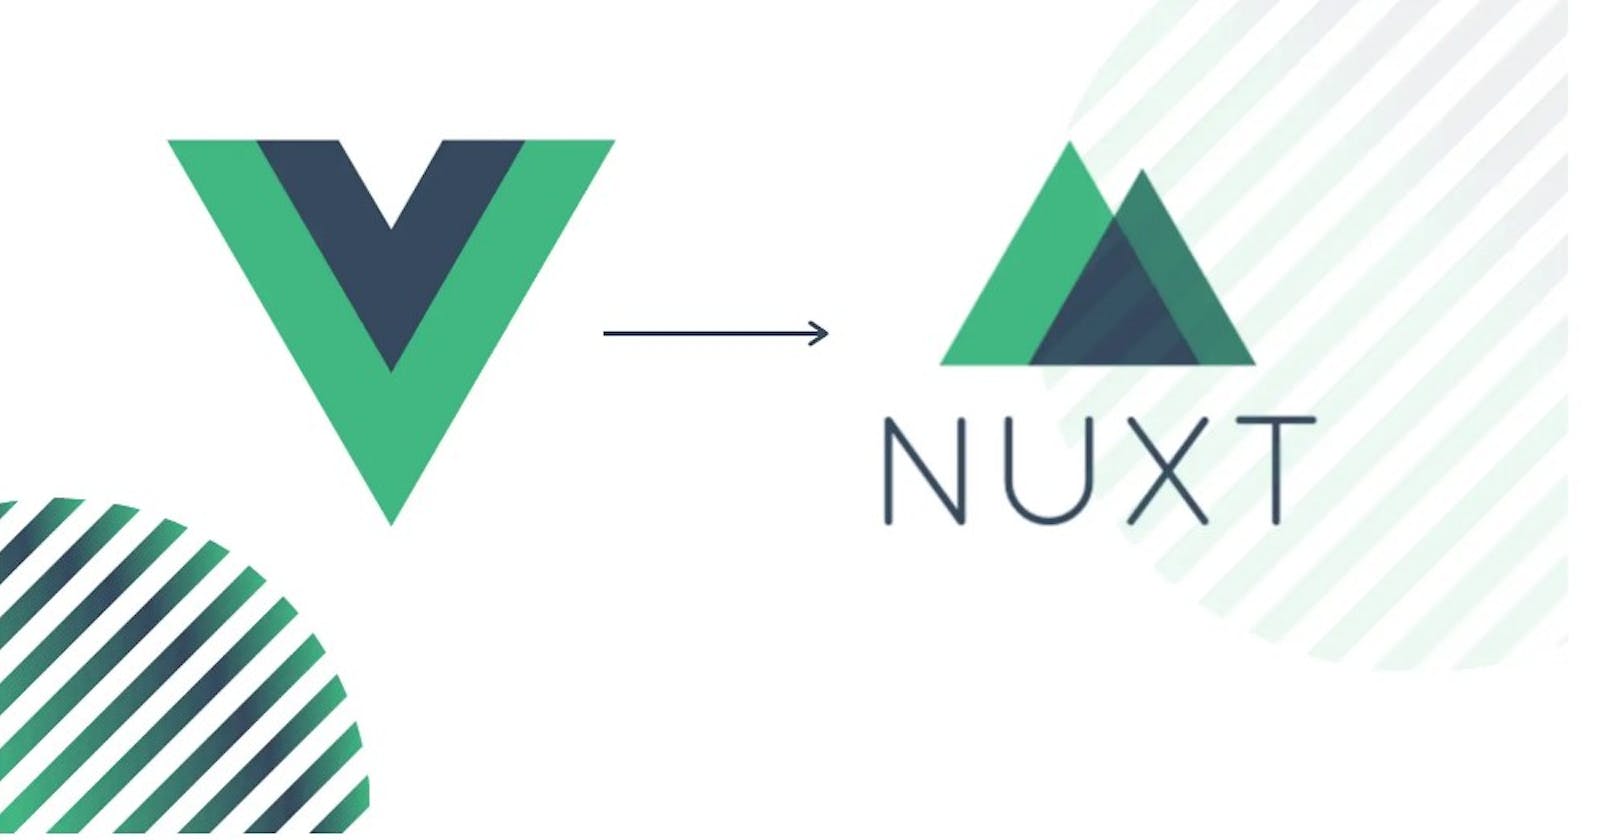 A convenient way to migrate the complete Vue.js application to Nuxt.js!